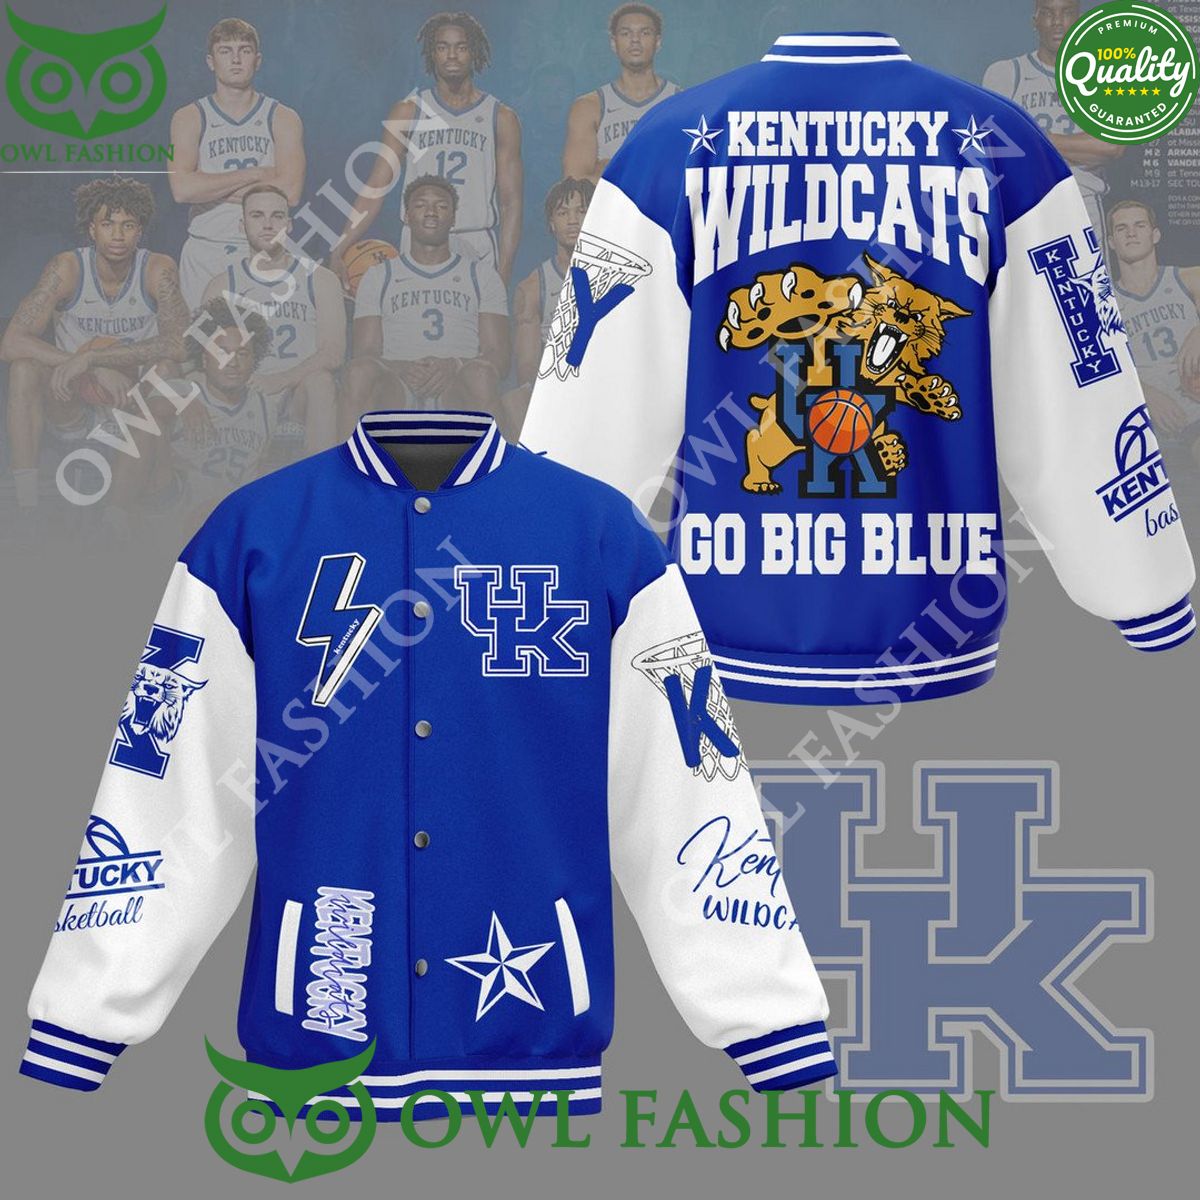 NCAA Kentucky Wildcats Go Big Blue Basketball baseball jacket Varsity